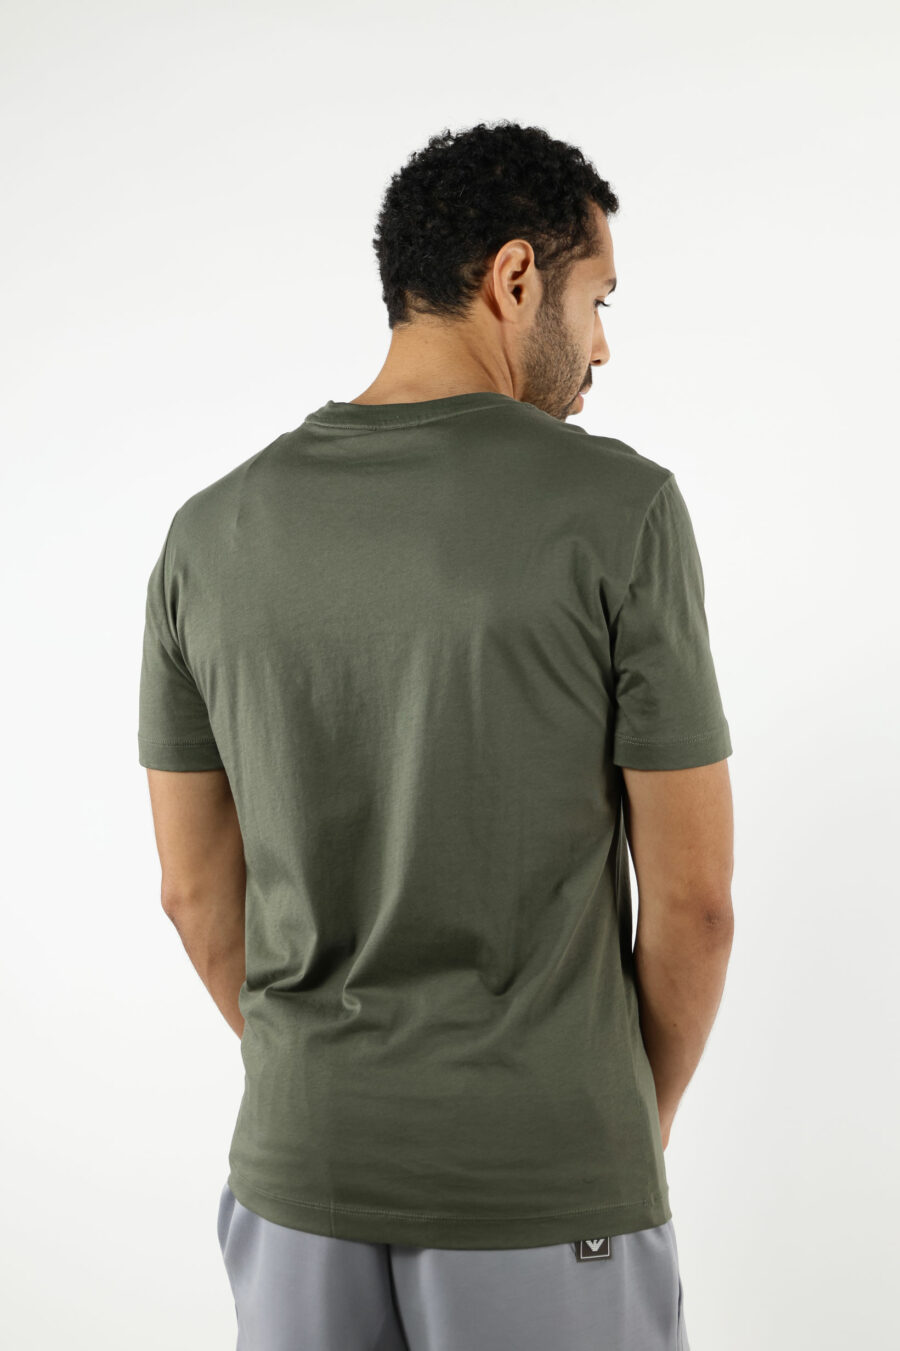 Grünes T-Shirt mit Farbverlauf "lux identity" Maxilogo - 110935